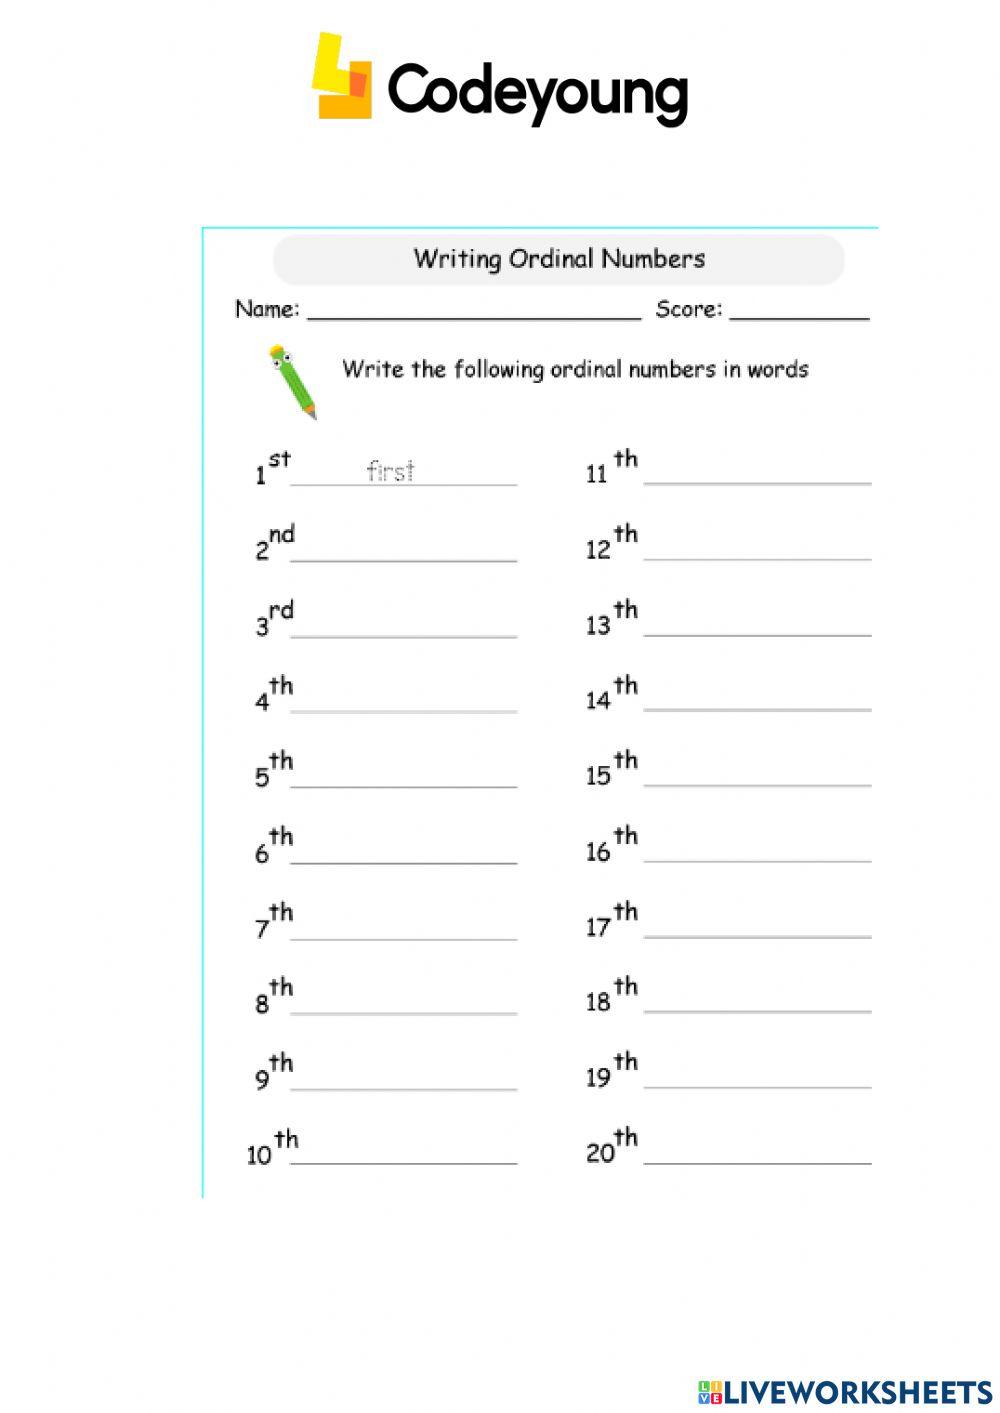 Ordinal numbers